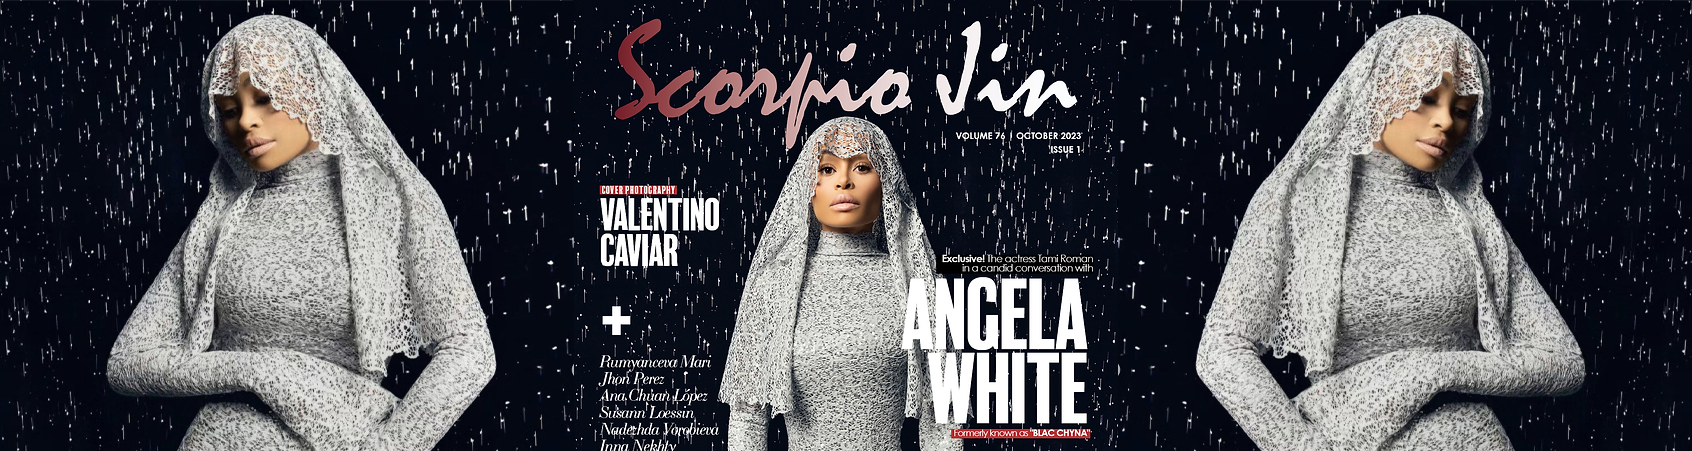 Angela White Wears Anna Zuckerman for Scorpio Jin Magazine